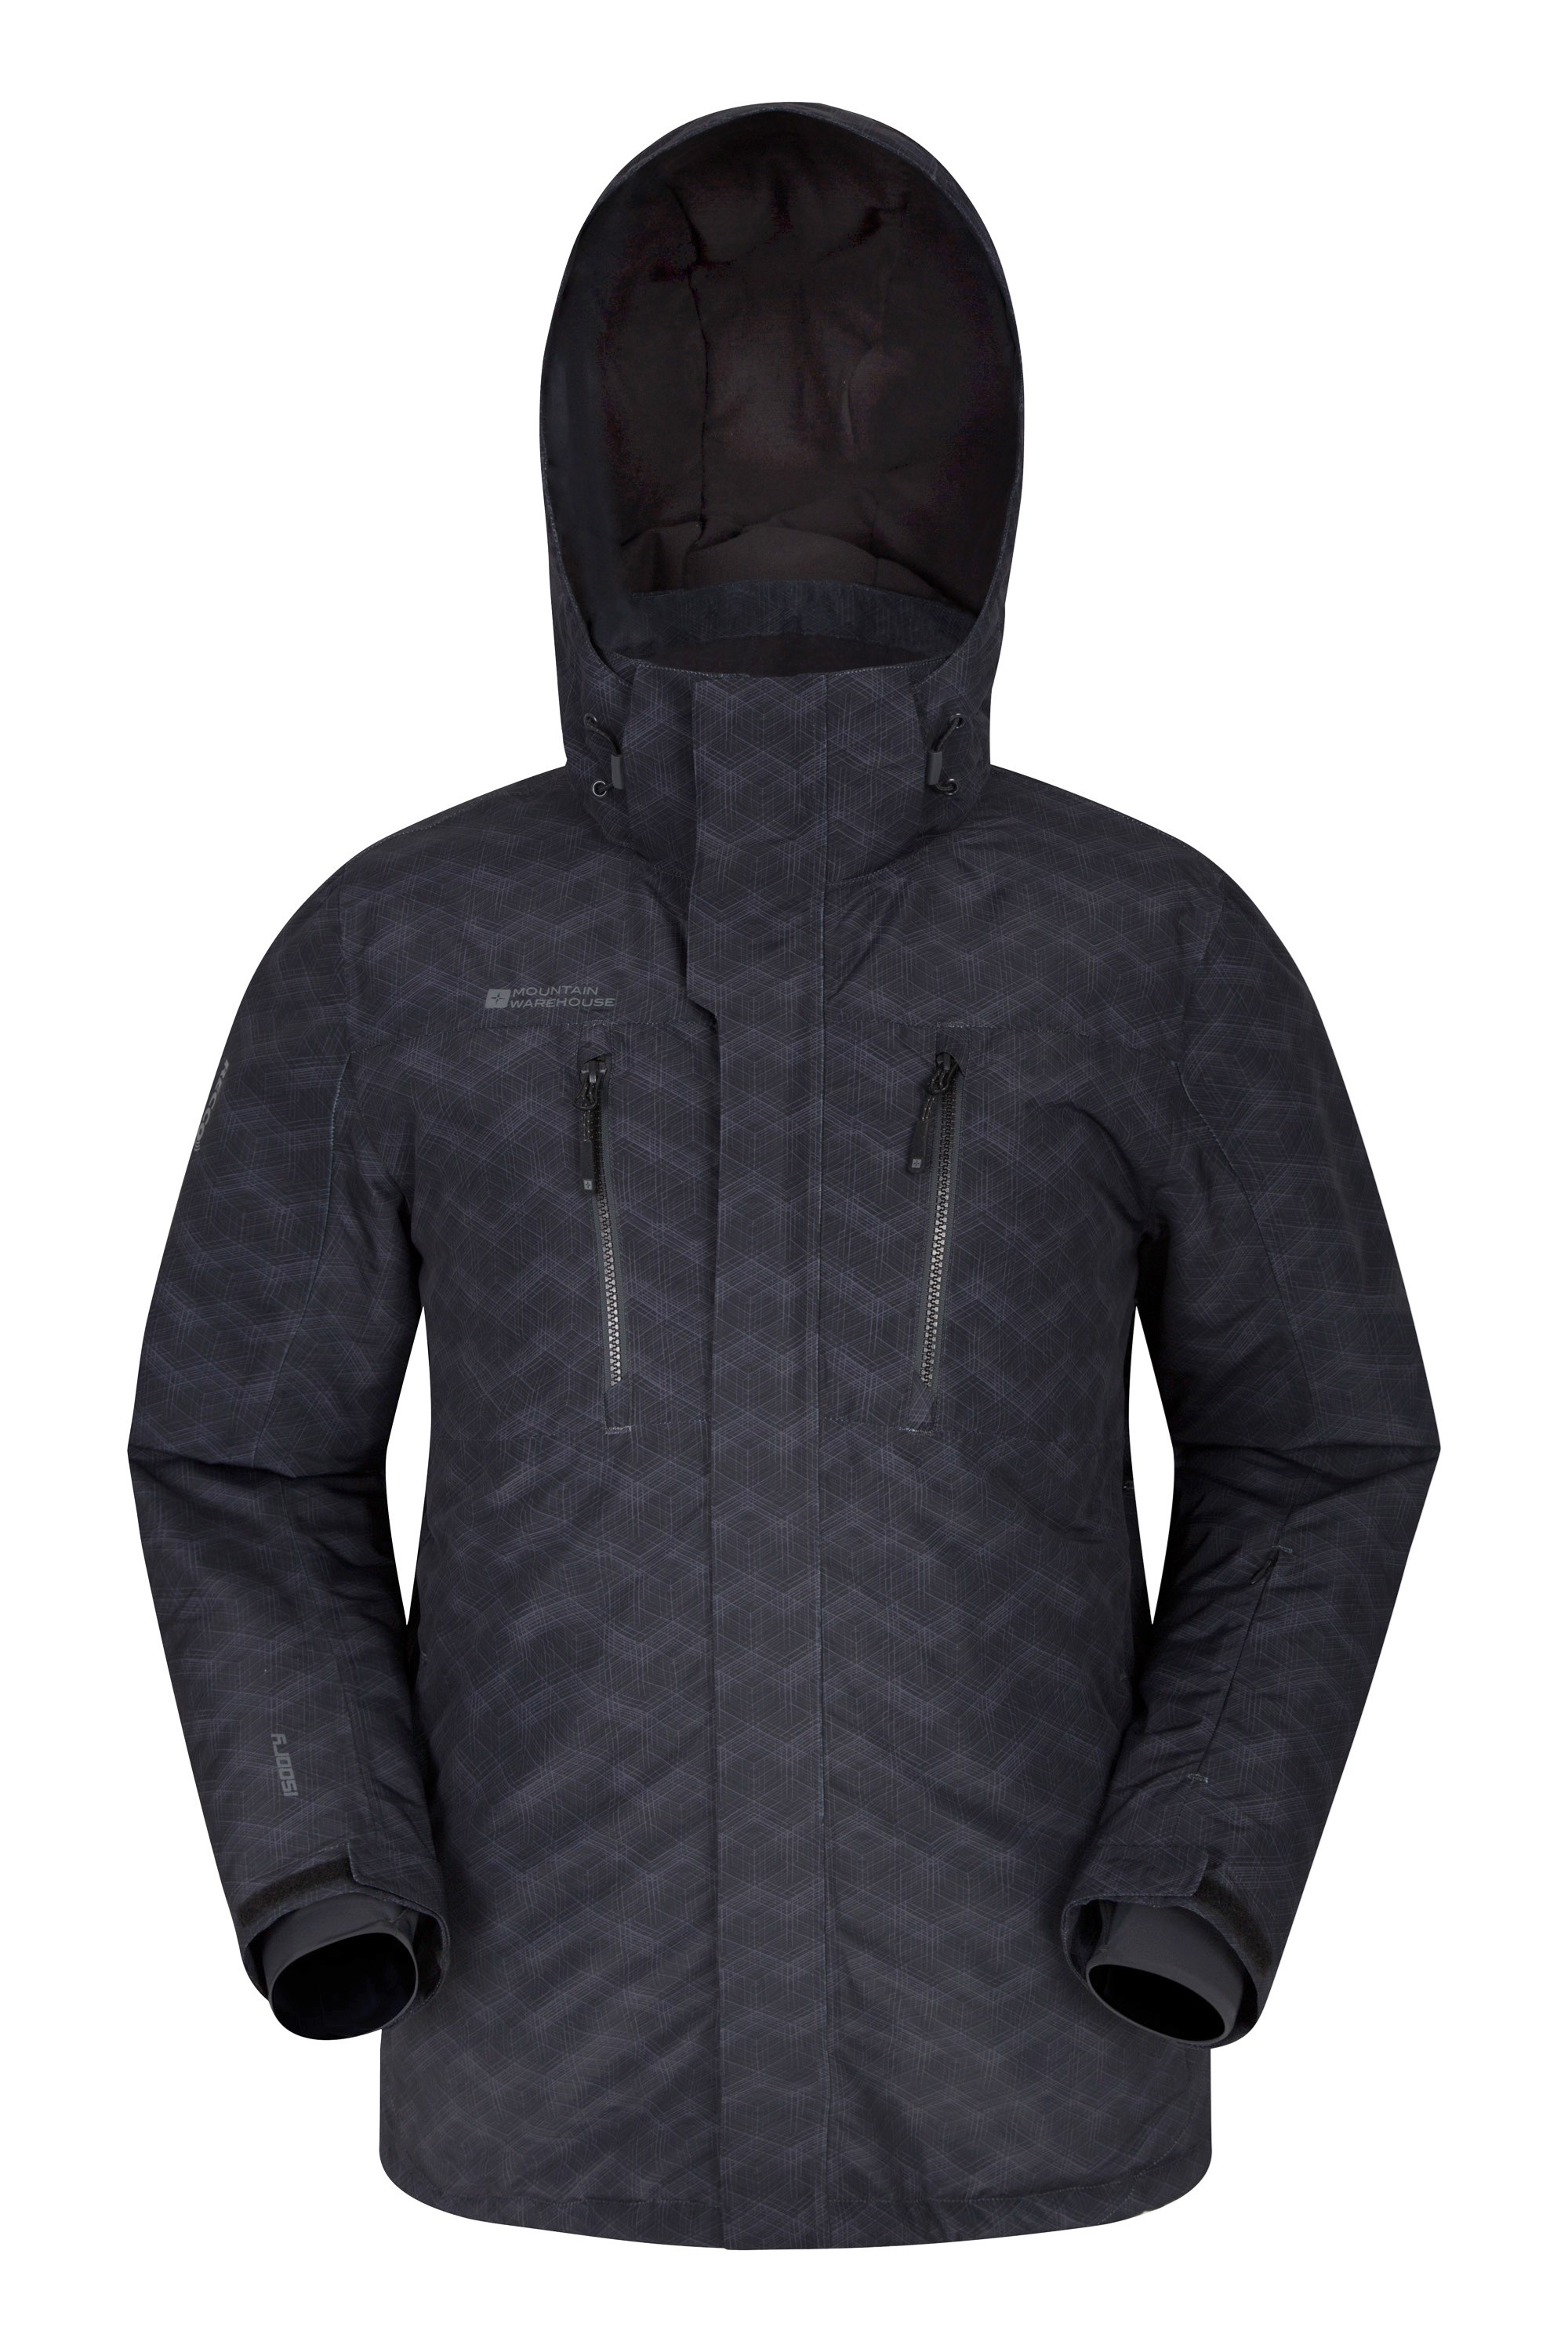 Mountain Warehouse Galaxy Printed Mens Ski Jacket Black